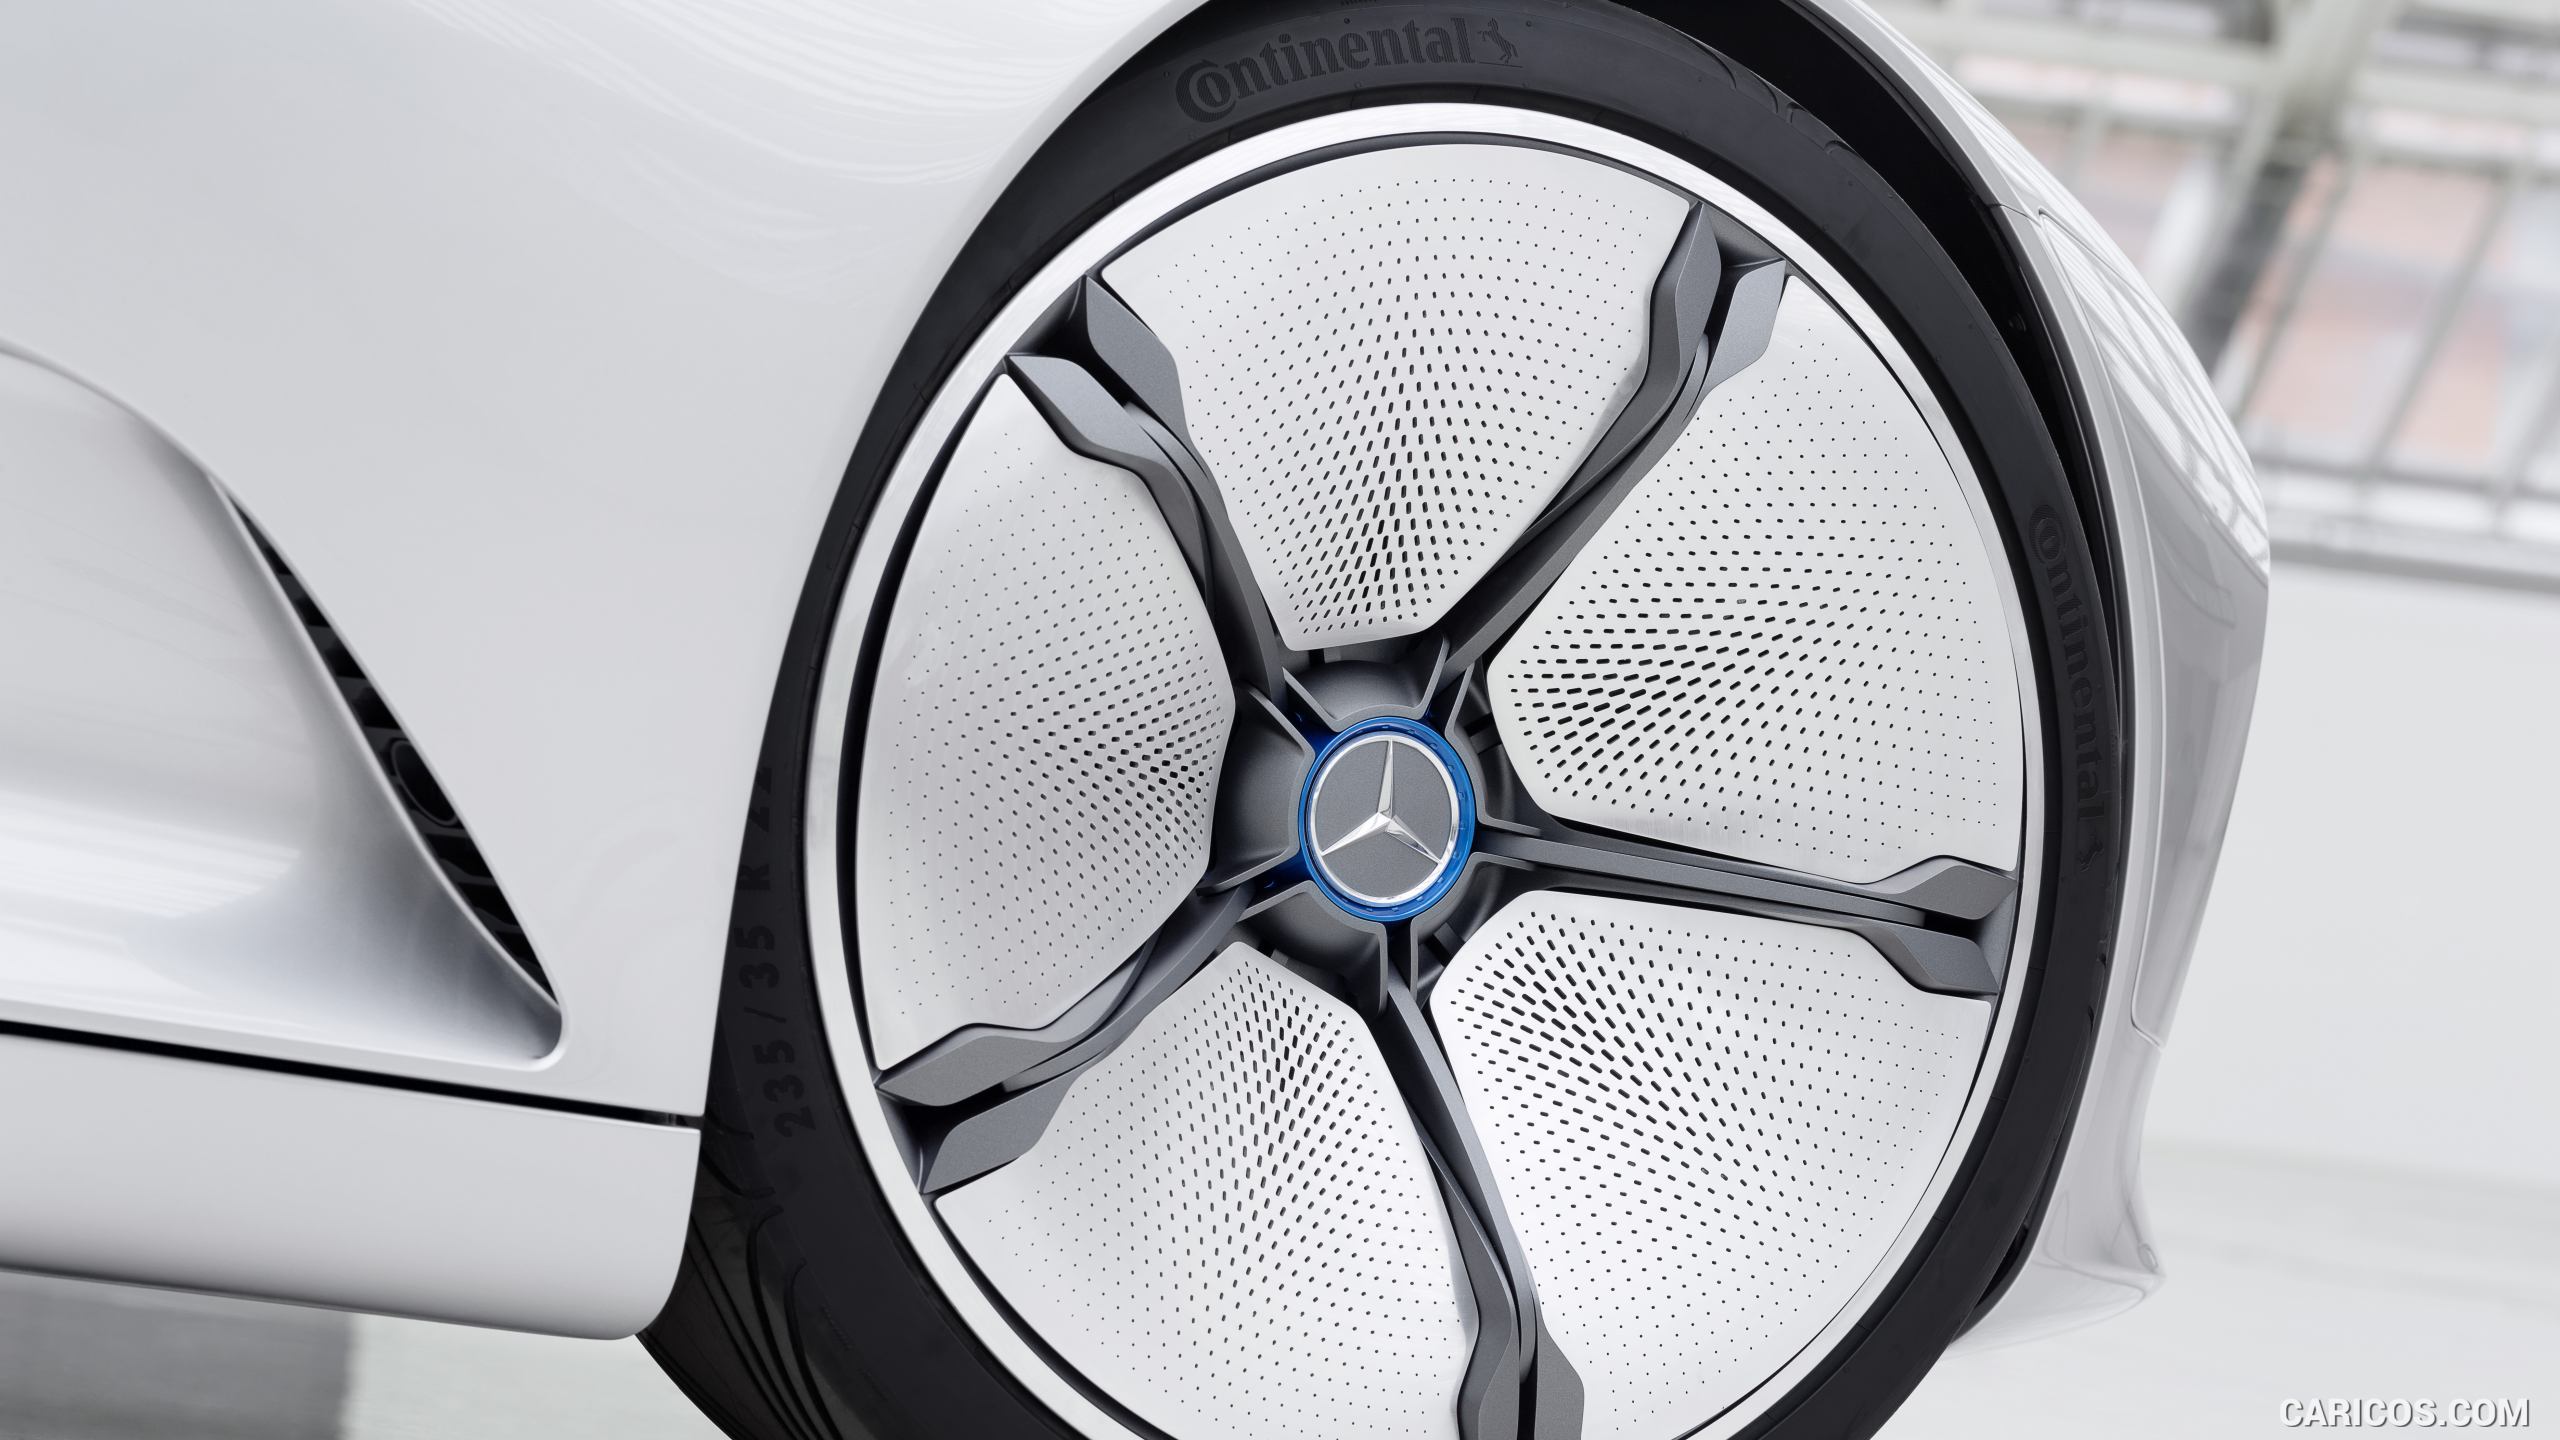 2015 Mercedes-Benz Concept IAA (Intelligent Aerodynamic Automobile) - Wheel, #37 of 49